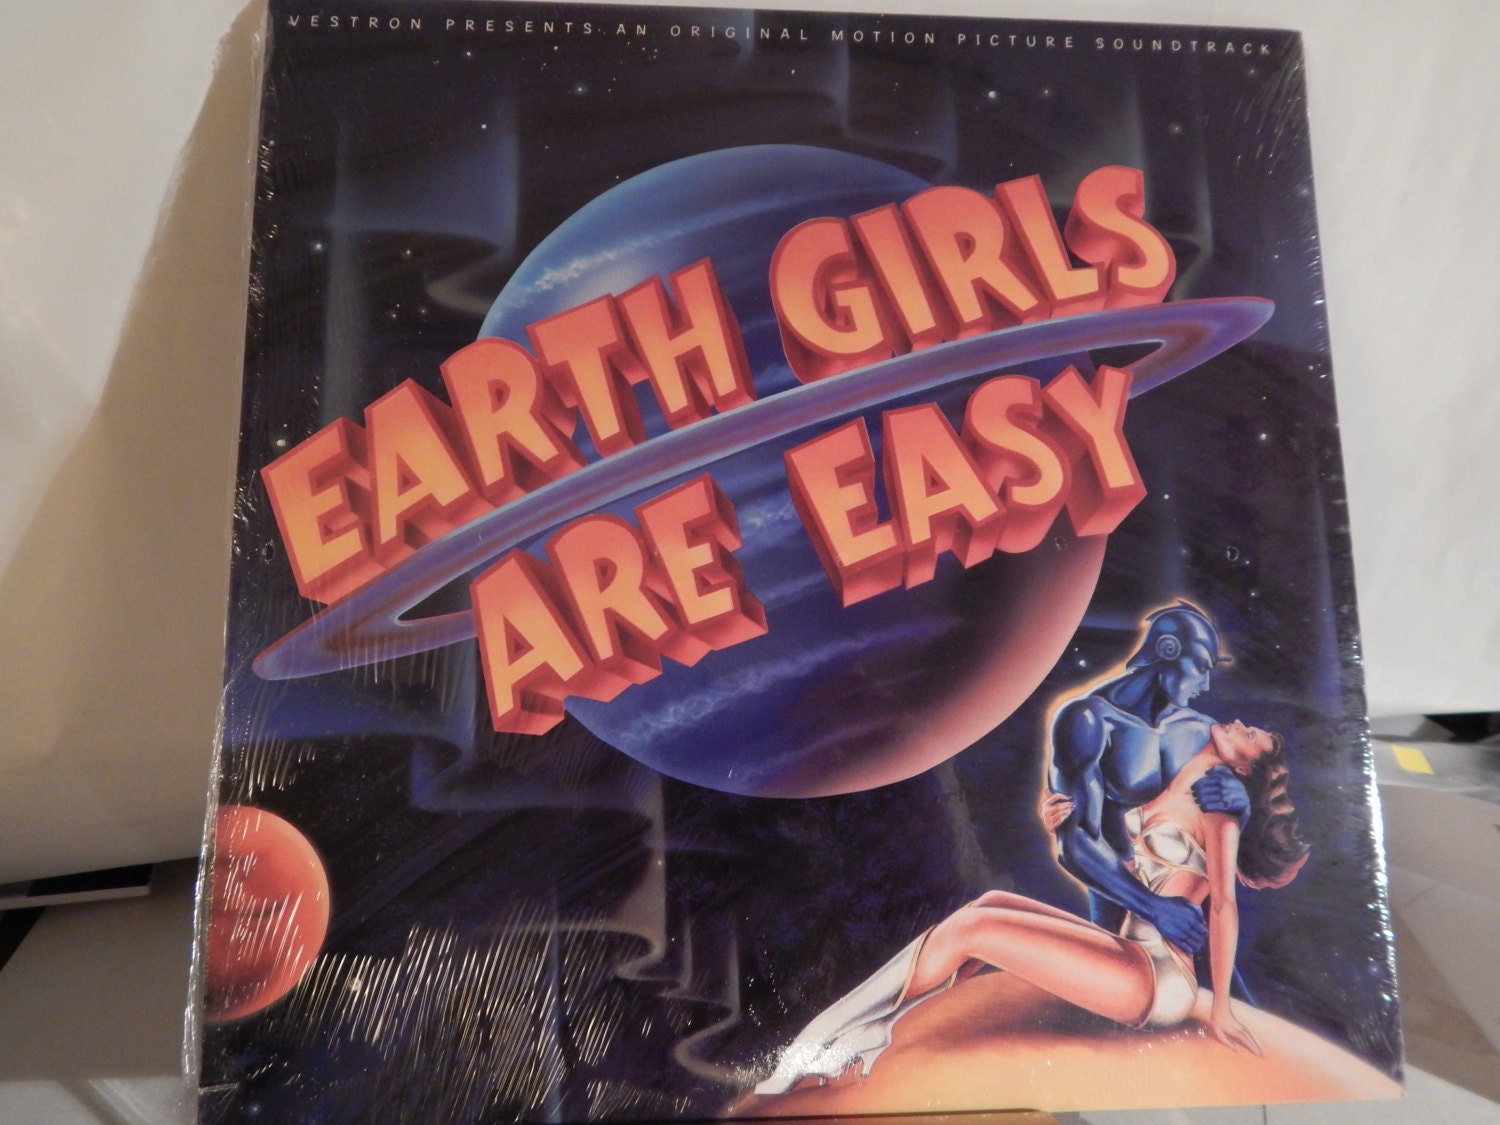 earth girls